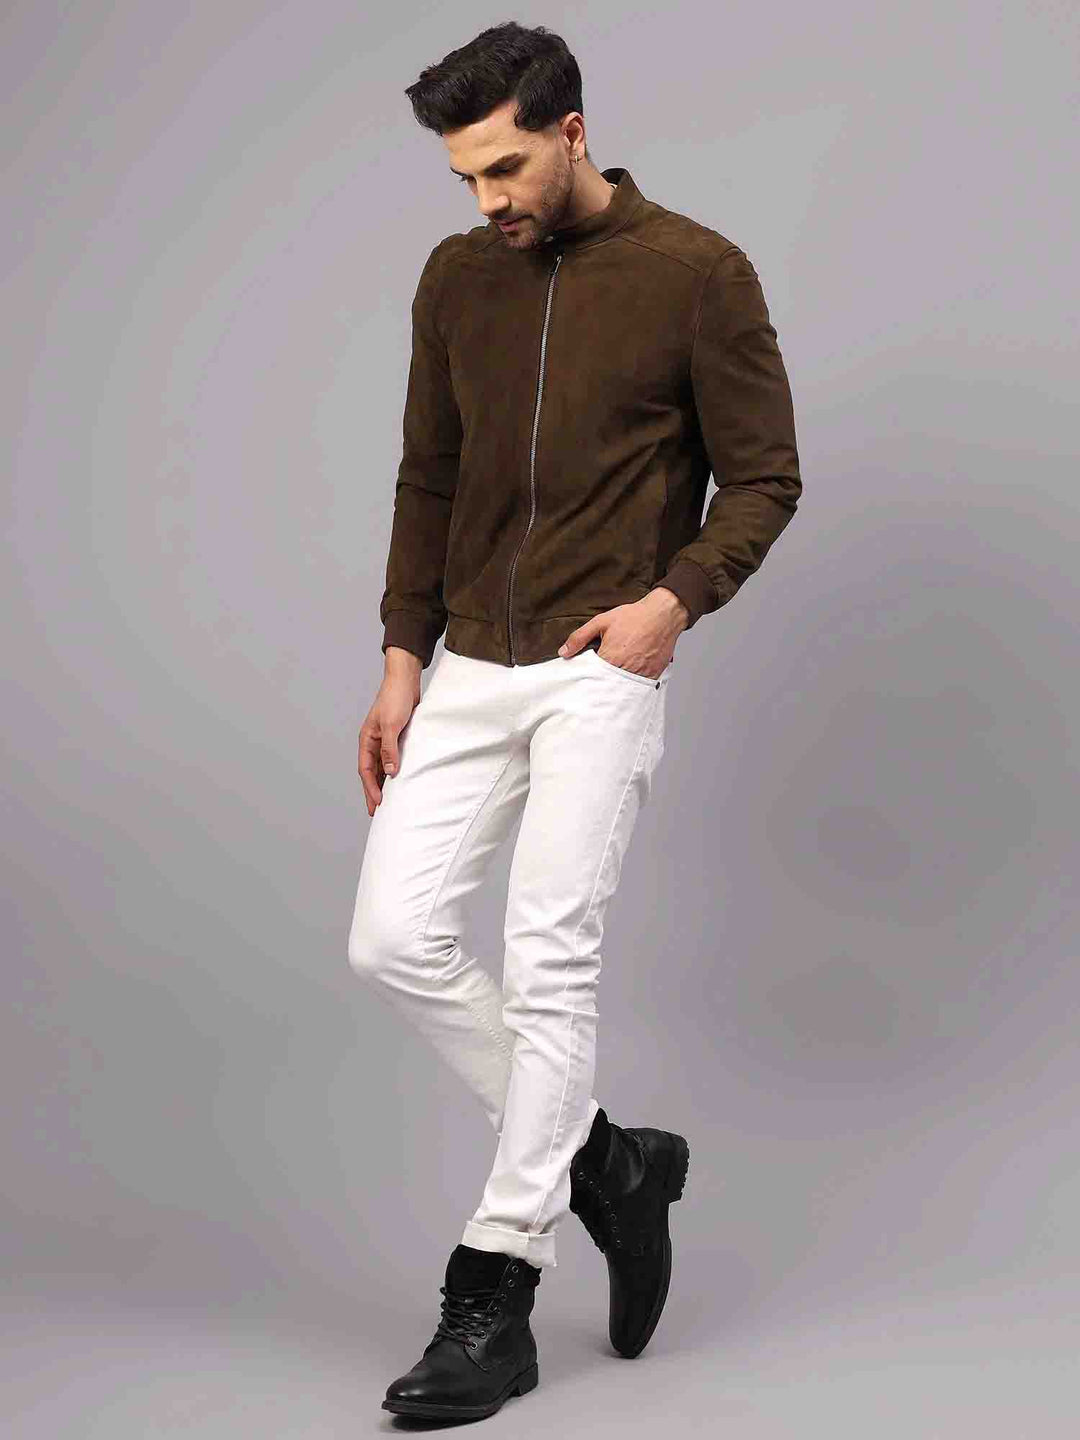 Saint Moreno Olive Suede Leather Men's Bomber Style Jackets